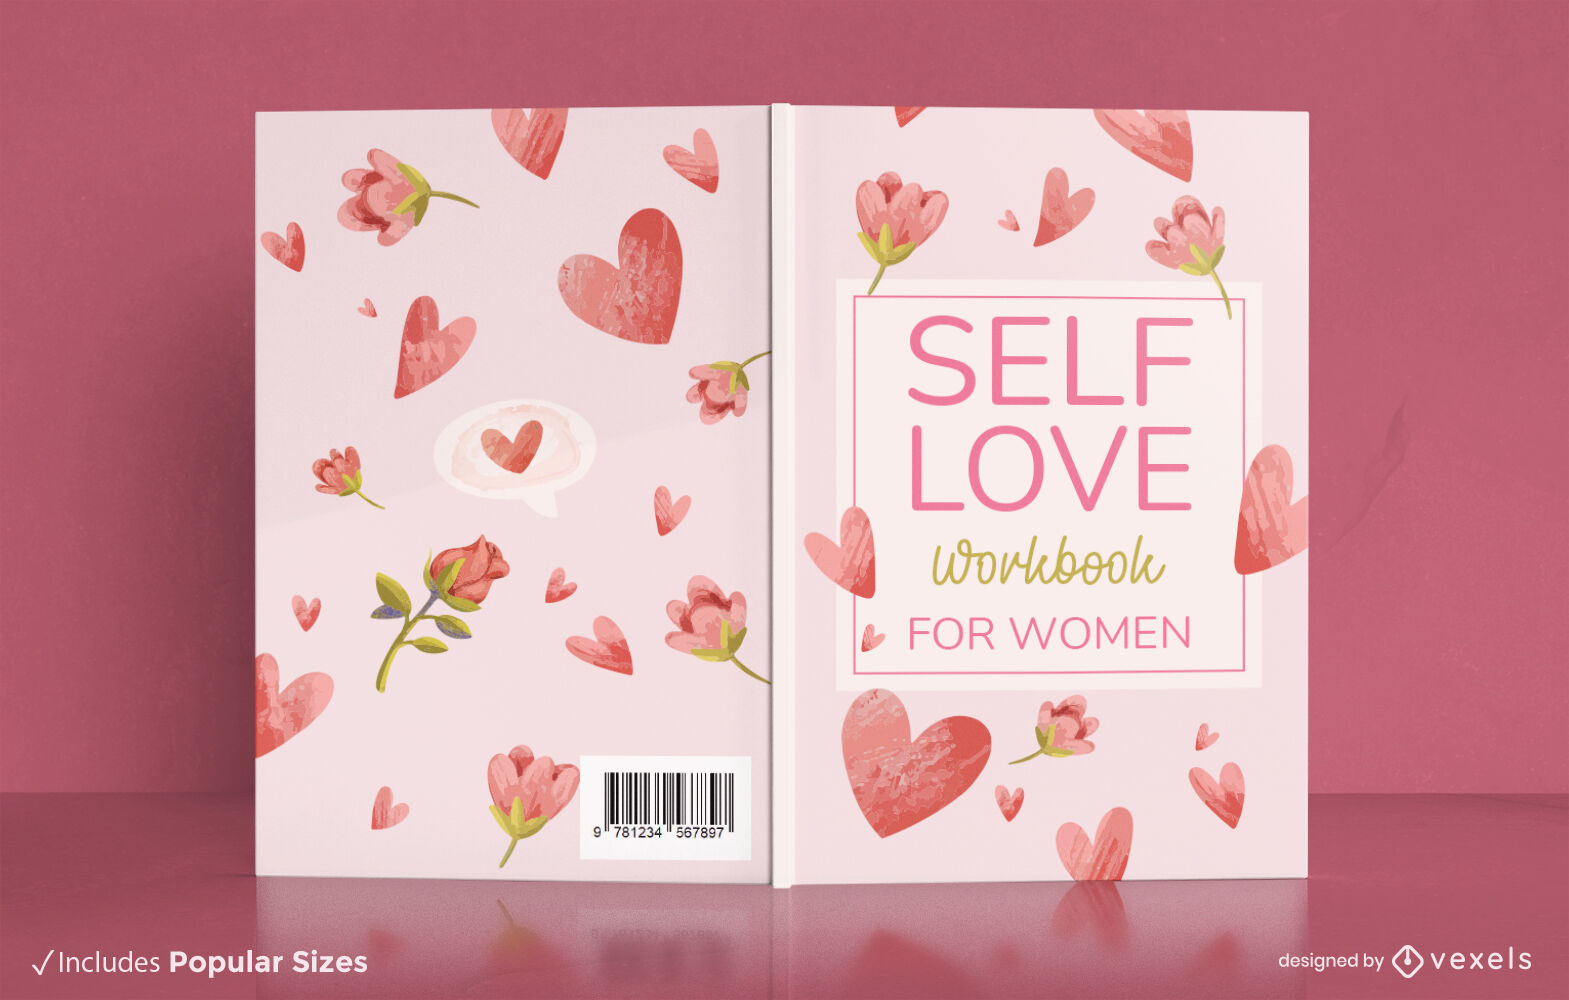 Self love for women book cover design KDP